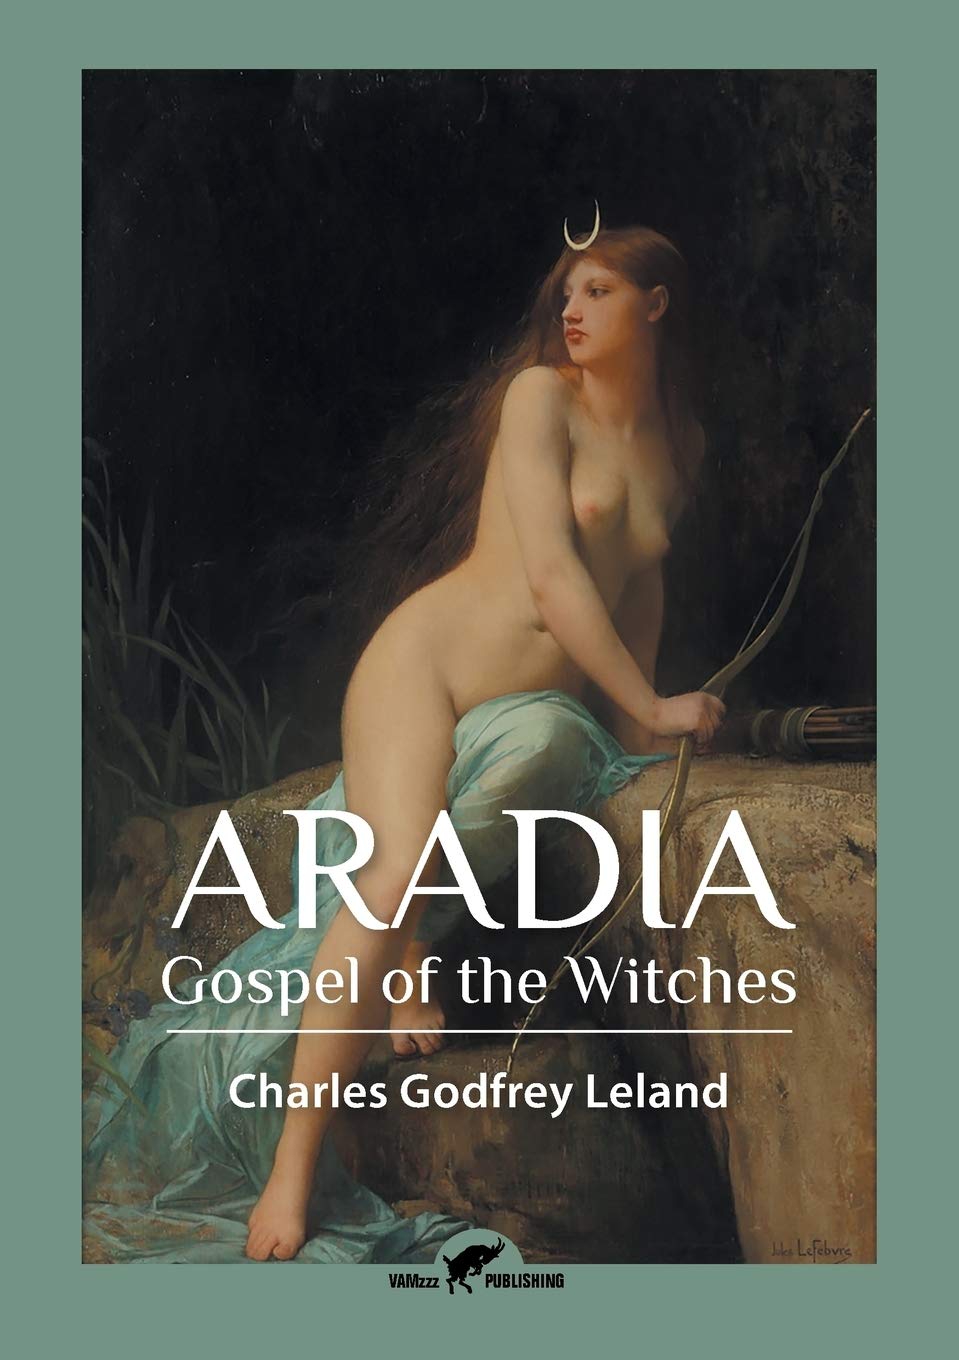 Aradia: Gospel of the Witches, by Charles Godfrey Leland